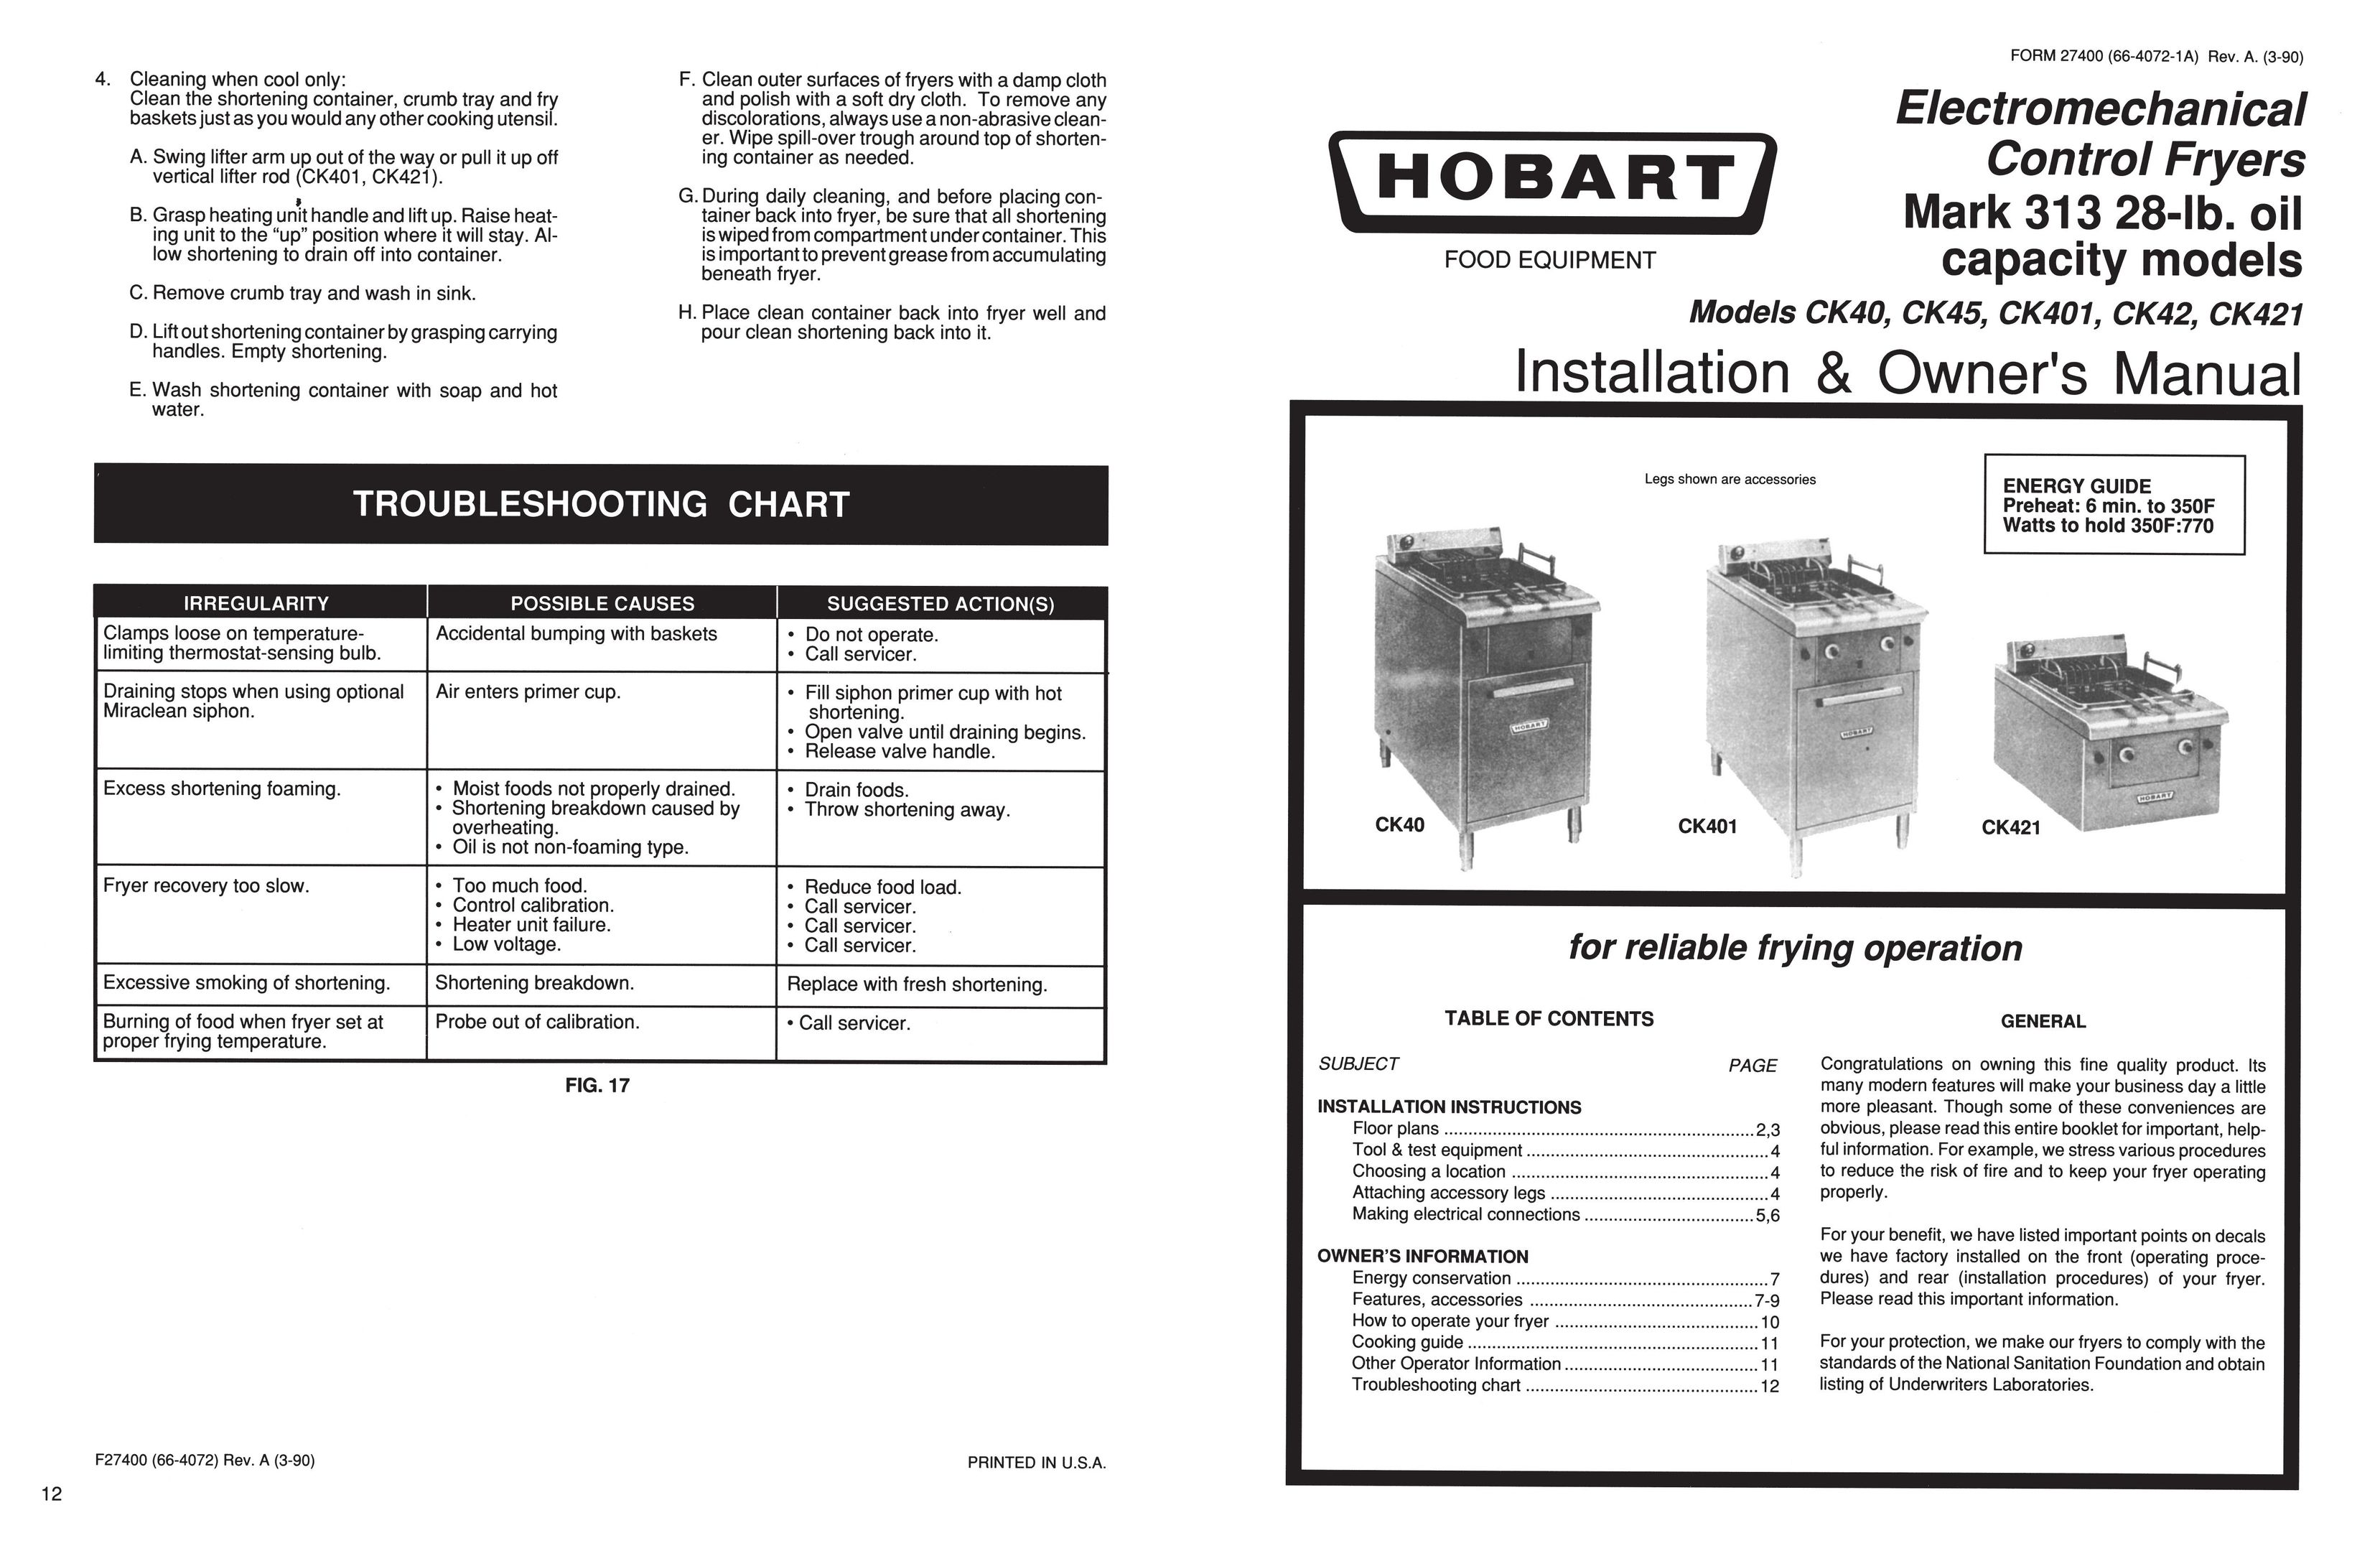 Hobart CK42 Fryer User Manual